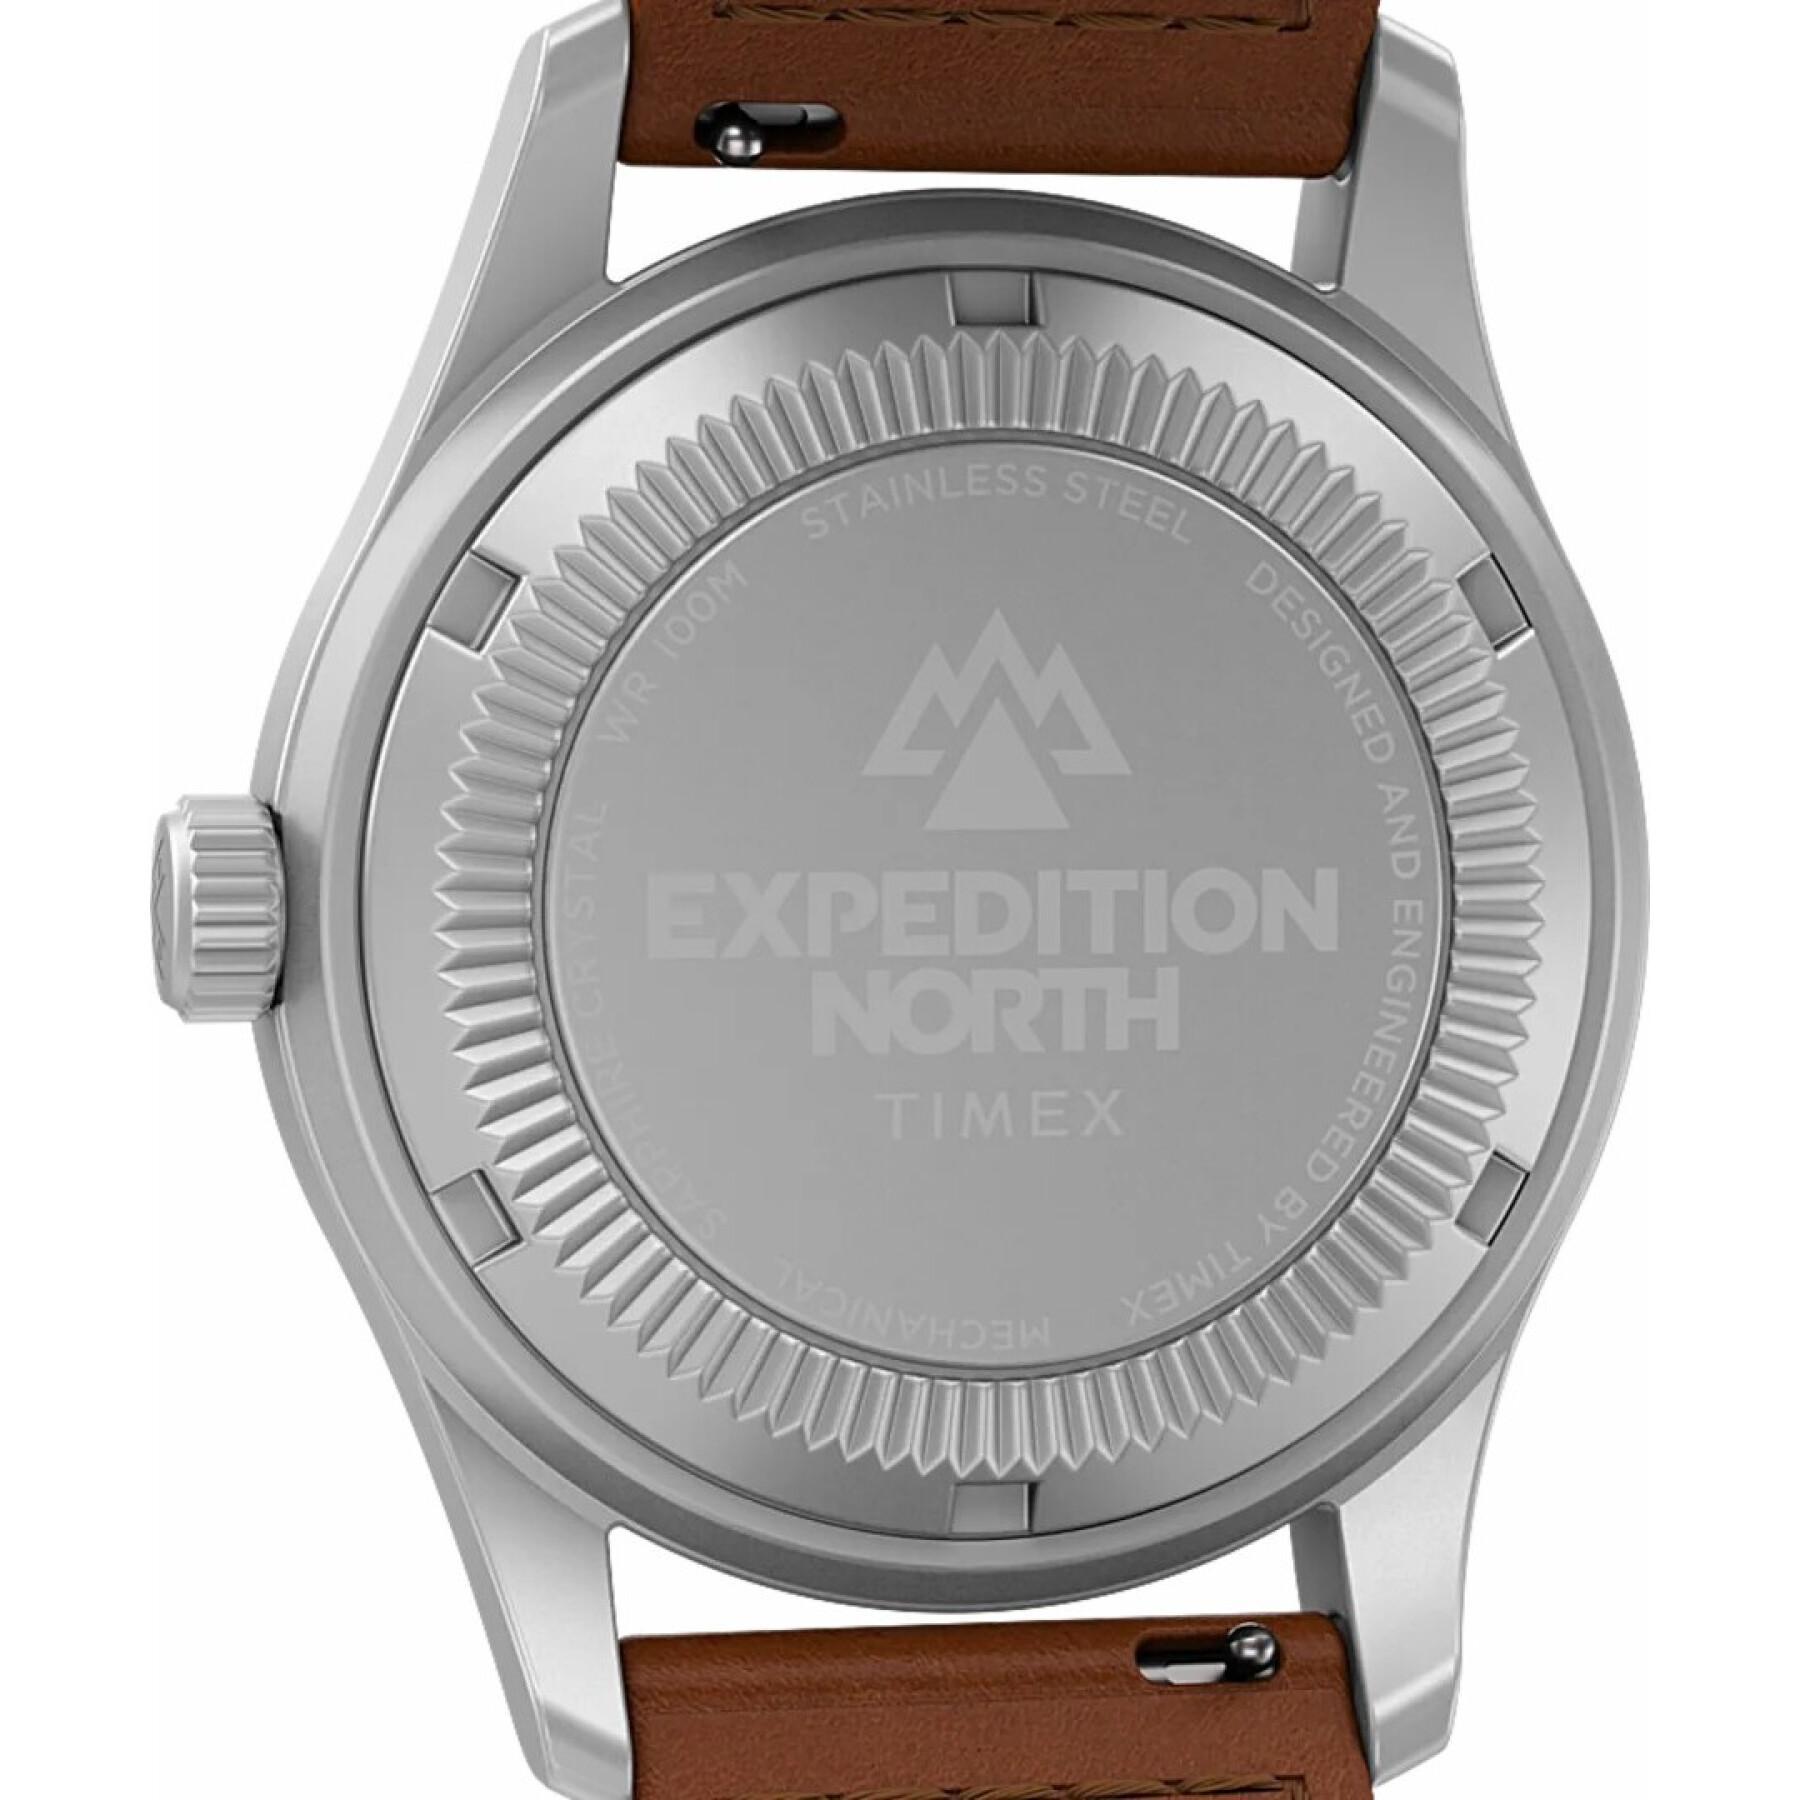 Titta på Timex Expedition North Titanium Automatic